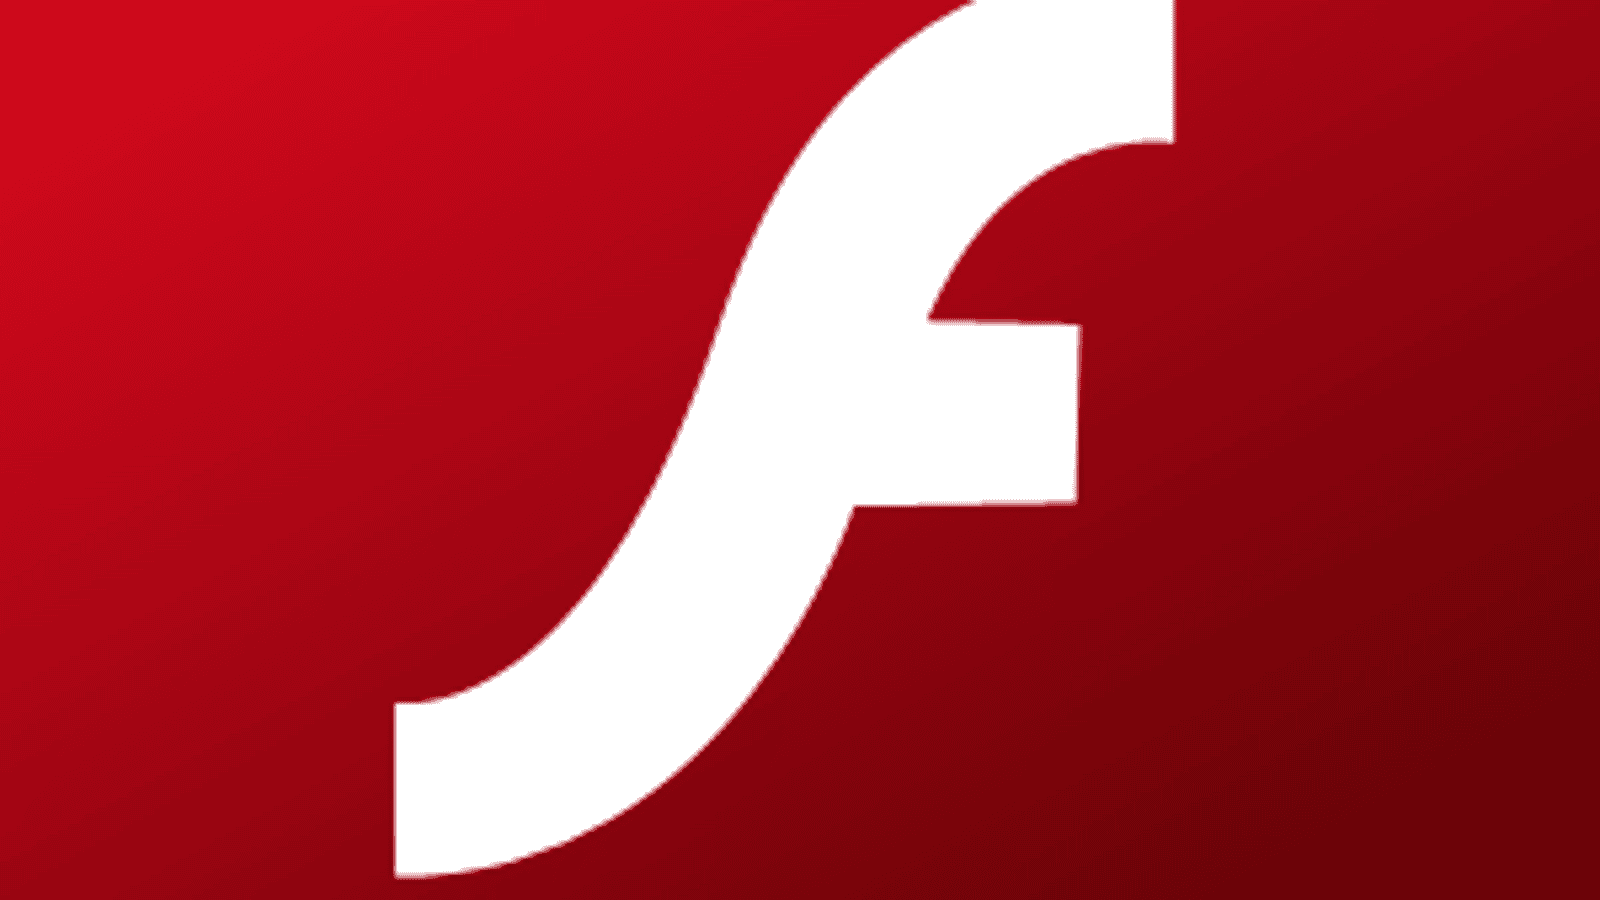 cnet free downloads adobe flash player 10.1